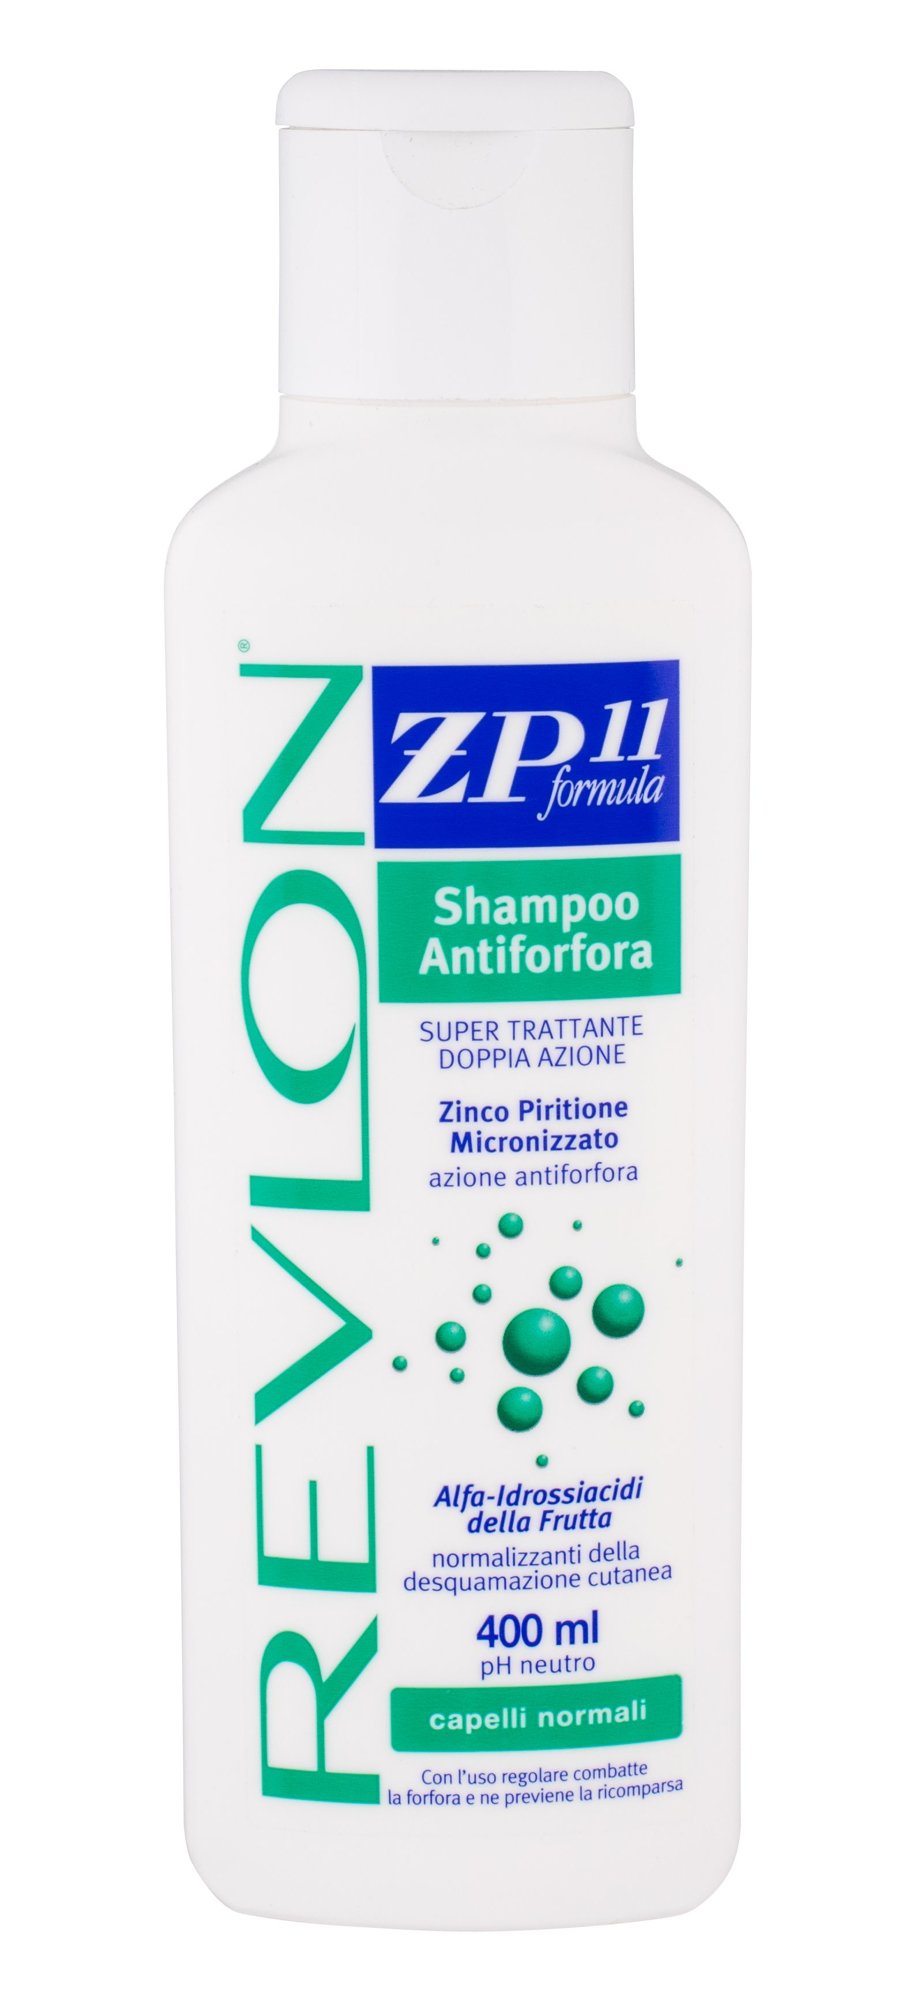 Revlon Professional ZP11 Formula Antiforfora šampūnas